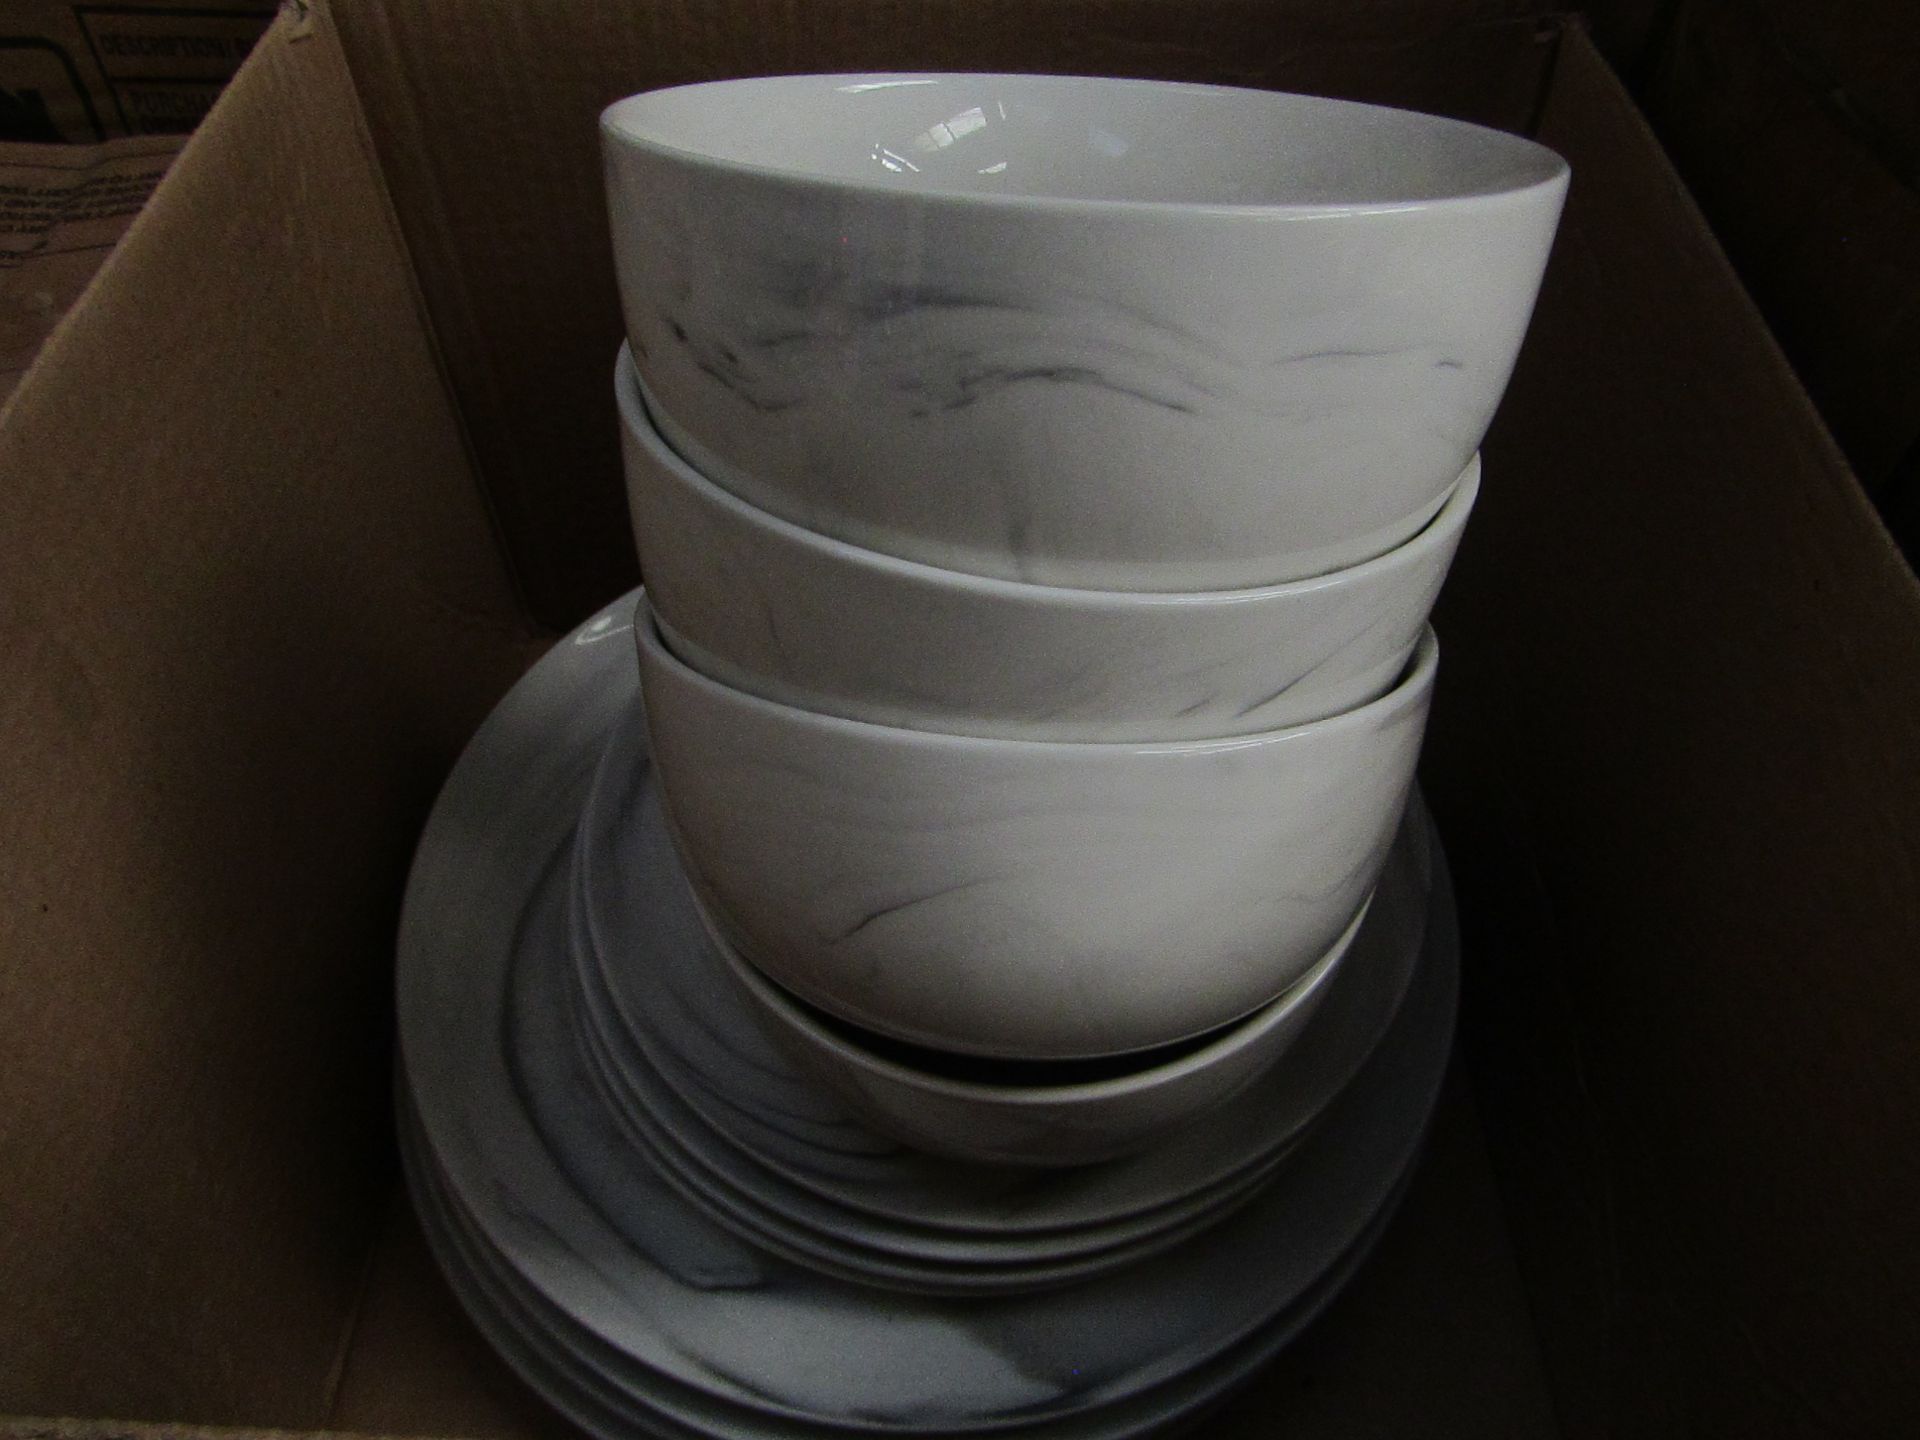 Over & Back - 12 Piece Porcelain Dinner Set - Non Original Box.